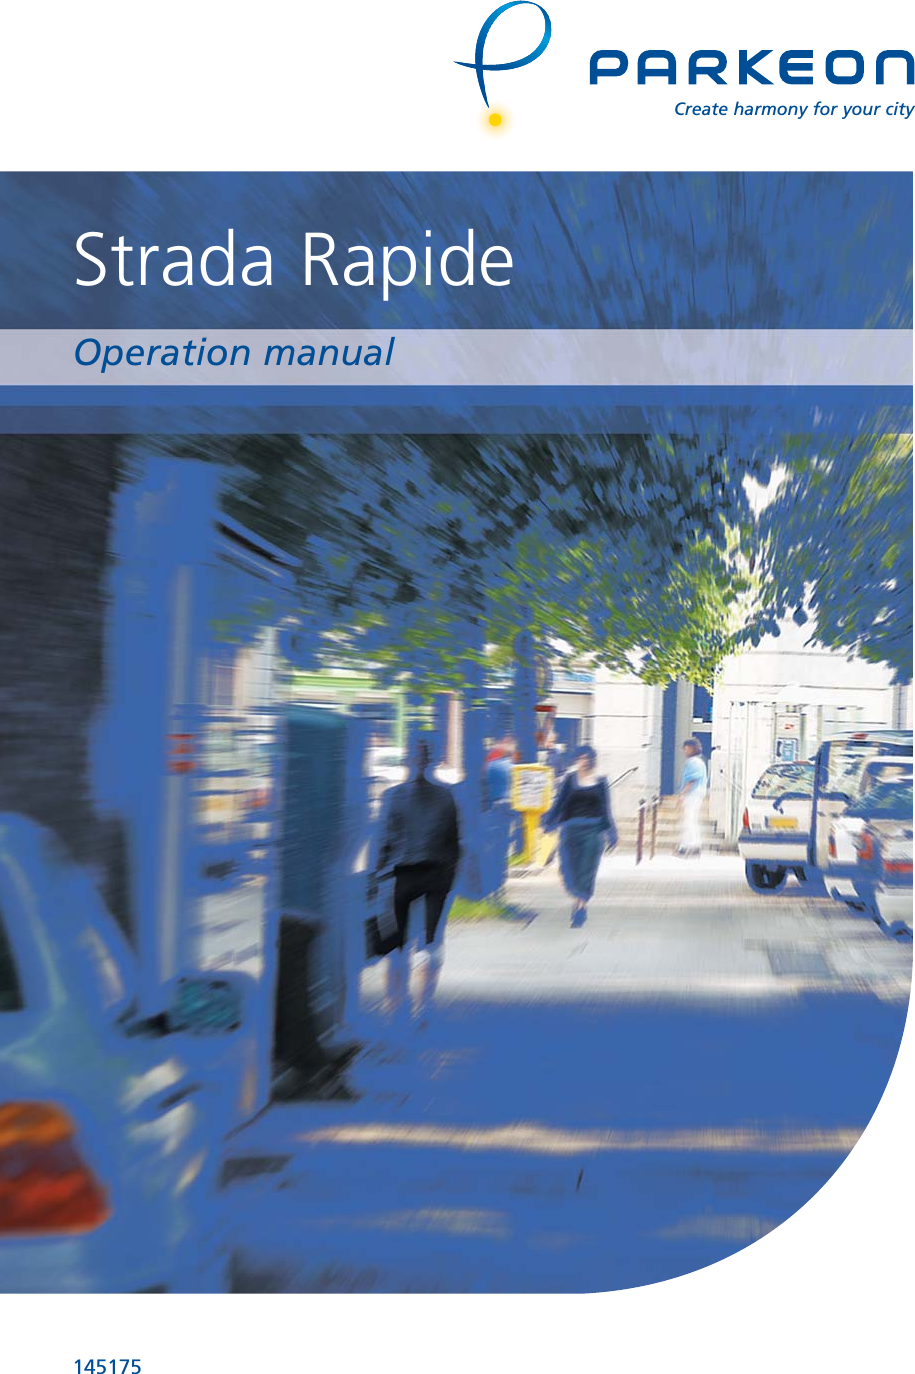 145175Strada RapideCreate harmony for your cityOperation manual